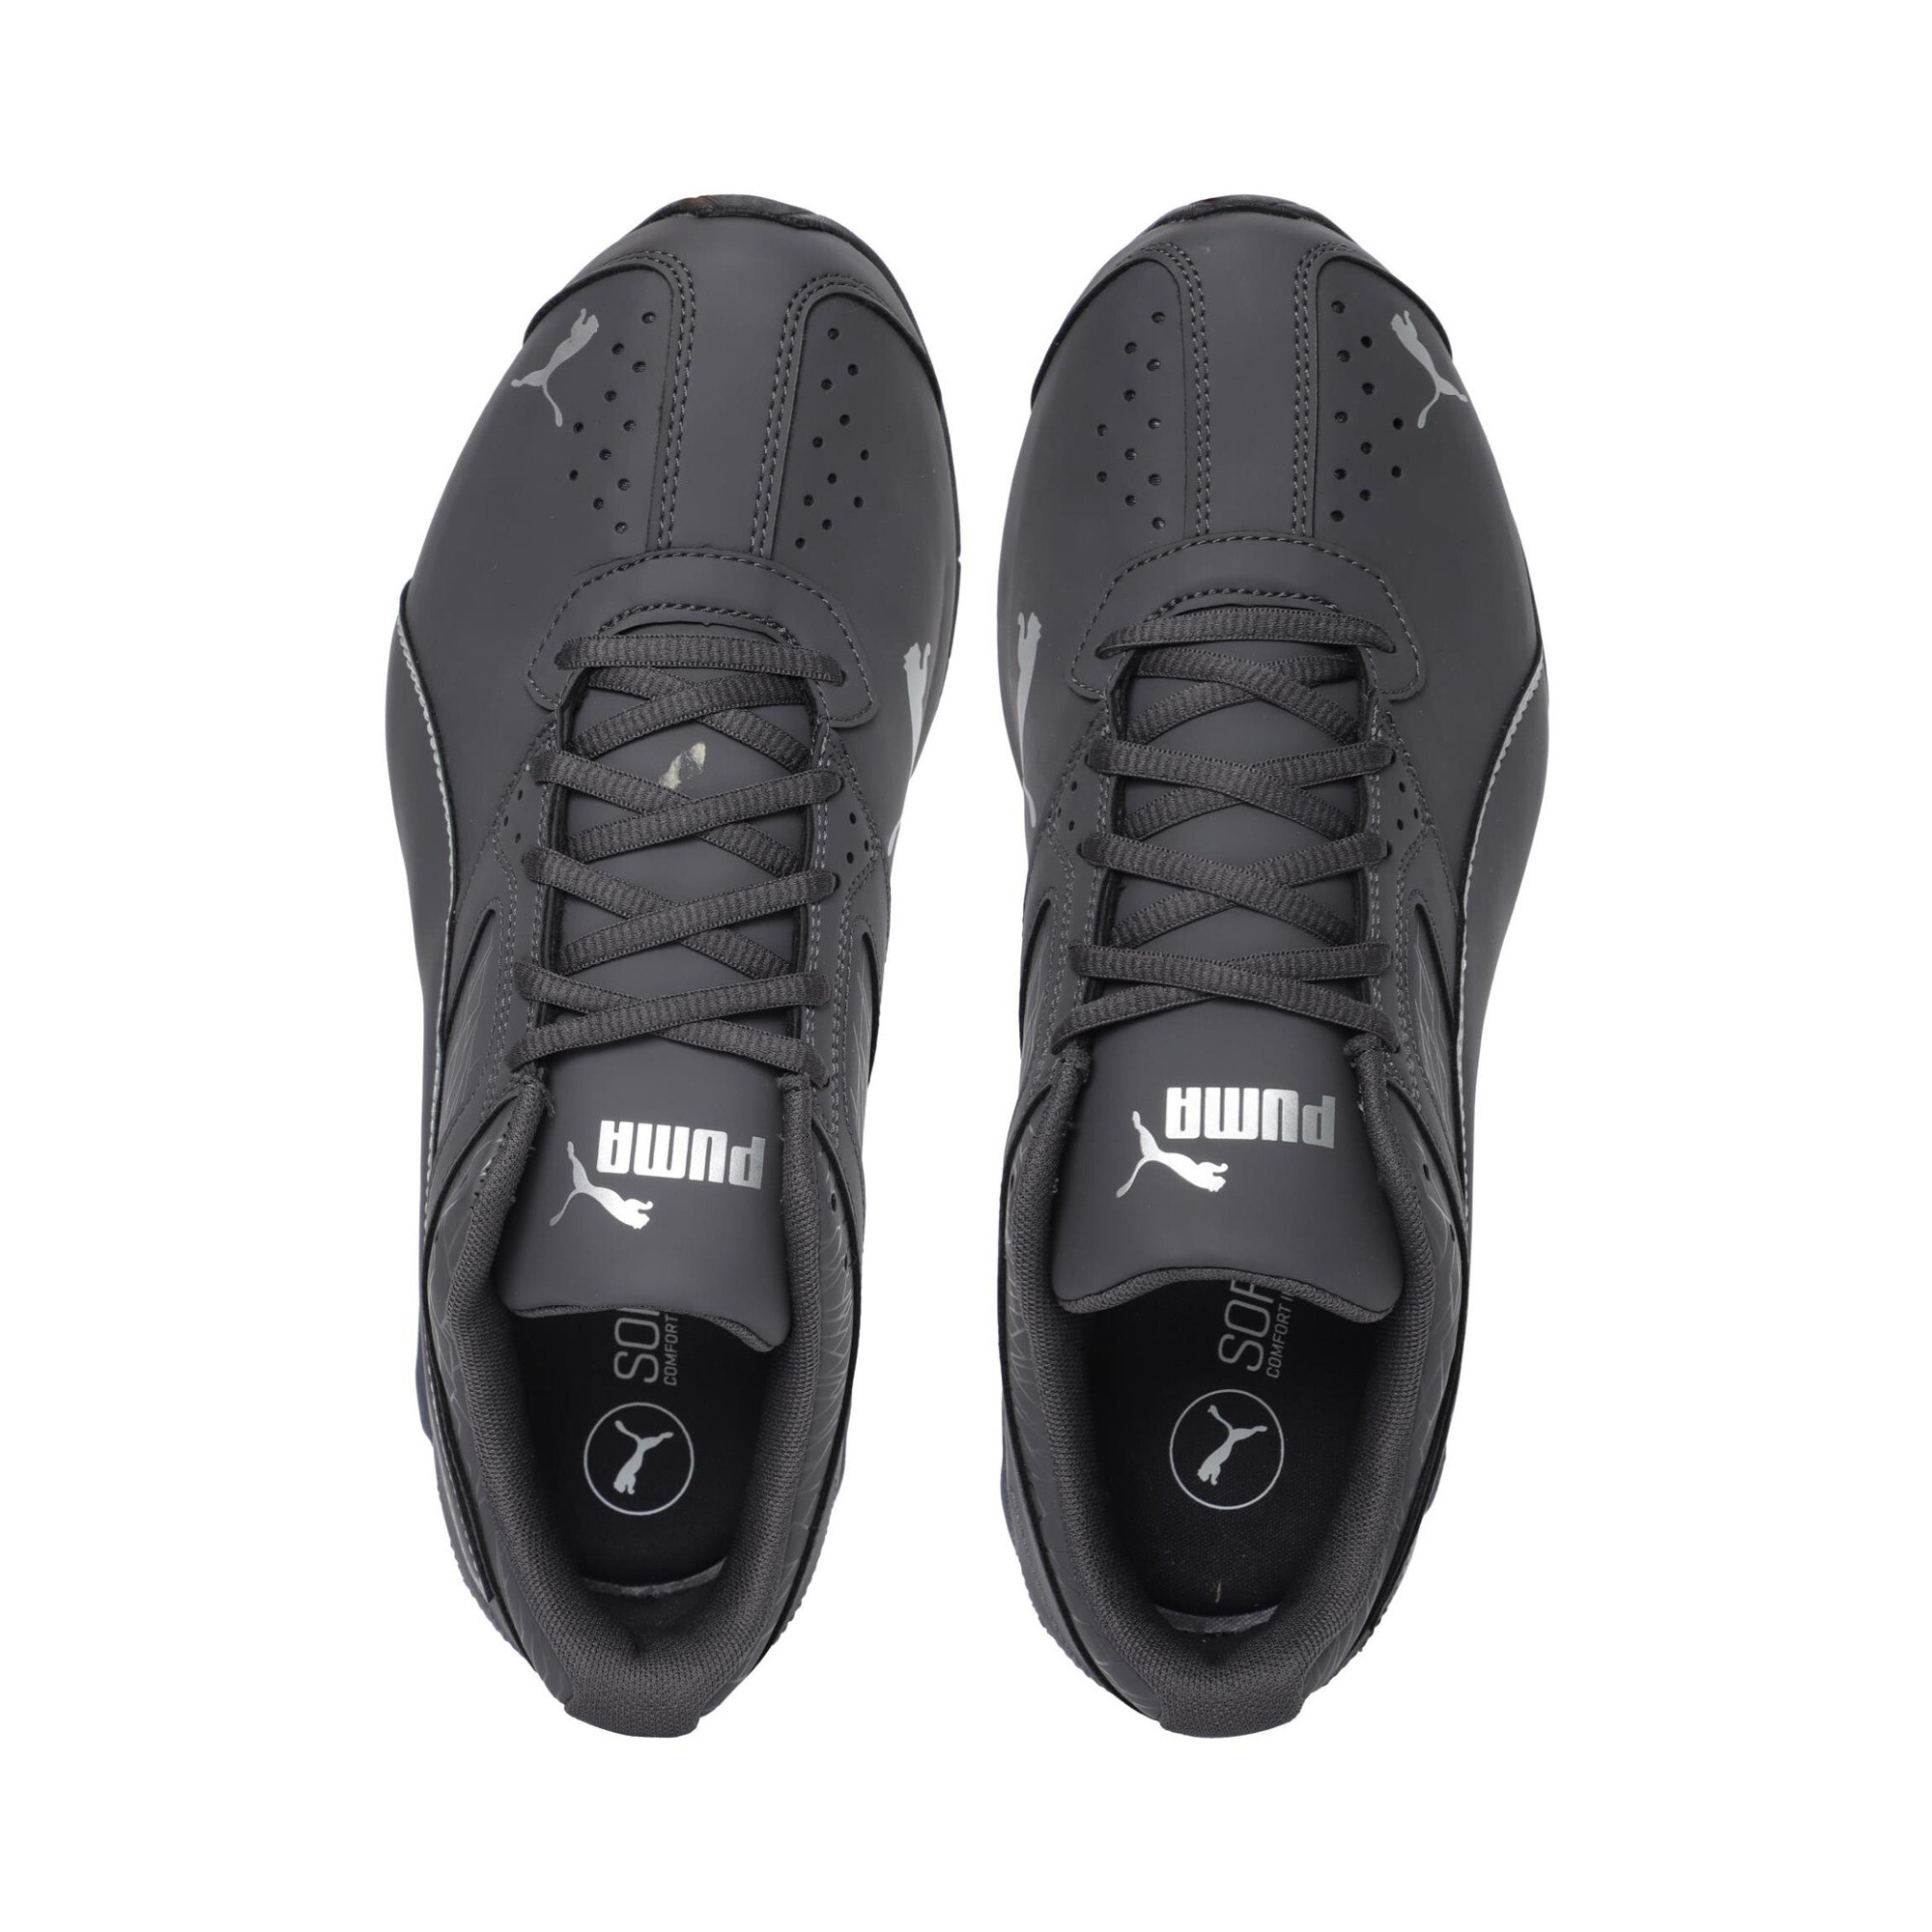 PUMA Men's Tazon 6 Fracture FM Sneakers | eBay